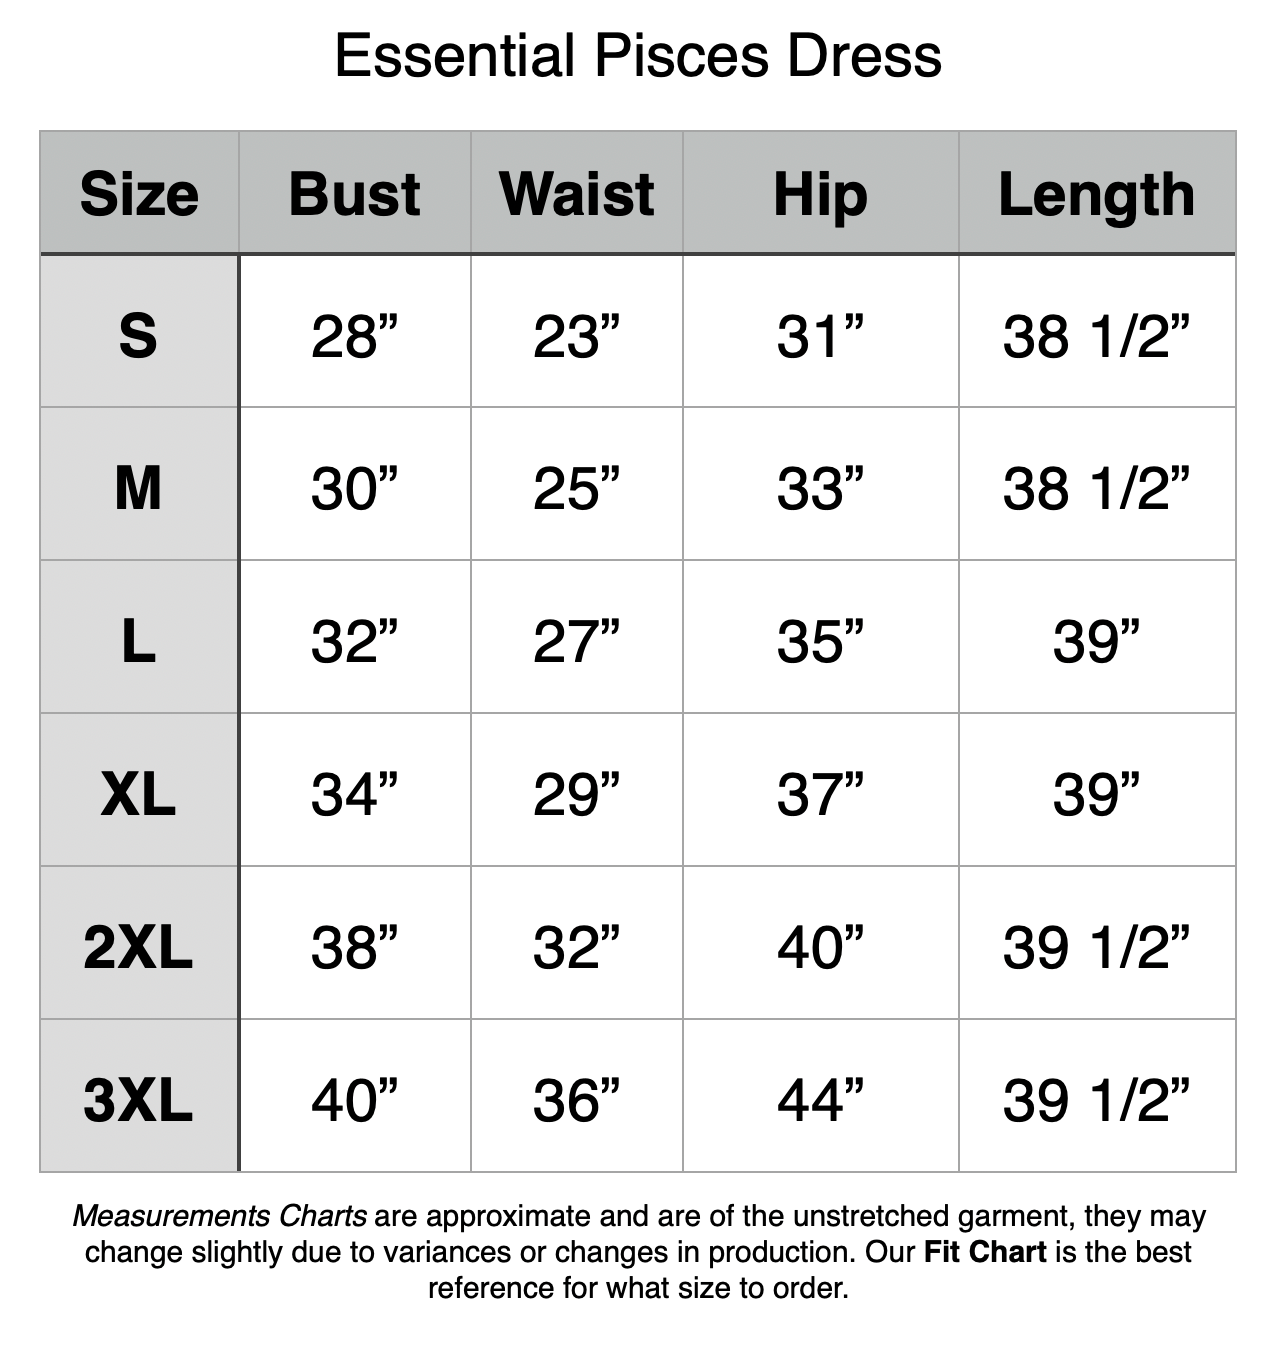 Essential Pisces Dress - Creepy & Kooky Stripes: S - 28” Bust, 23” Waist, 31” Hip, 38.5” Length. M - 30” Bust, 25” Waist, 33” Hip, 38.5” Length. L - 32” Bust, 27” Waist, 35” Hip, 39” Length. XL - 34” Bust, 29” Waist, 37” Hip, 39” Length. 2XL - 38” Bust, 32” Waist, 40” Hip, 39.5” Length. 3XL - 40” Bust, 36” Waist, 44” Hip, 39.5” Length.